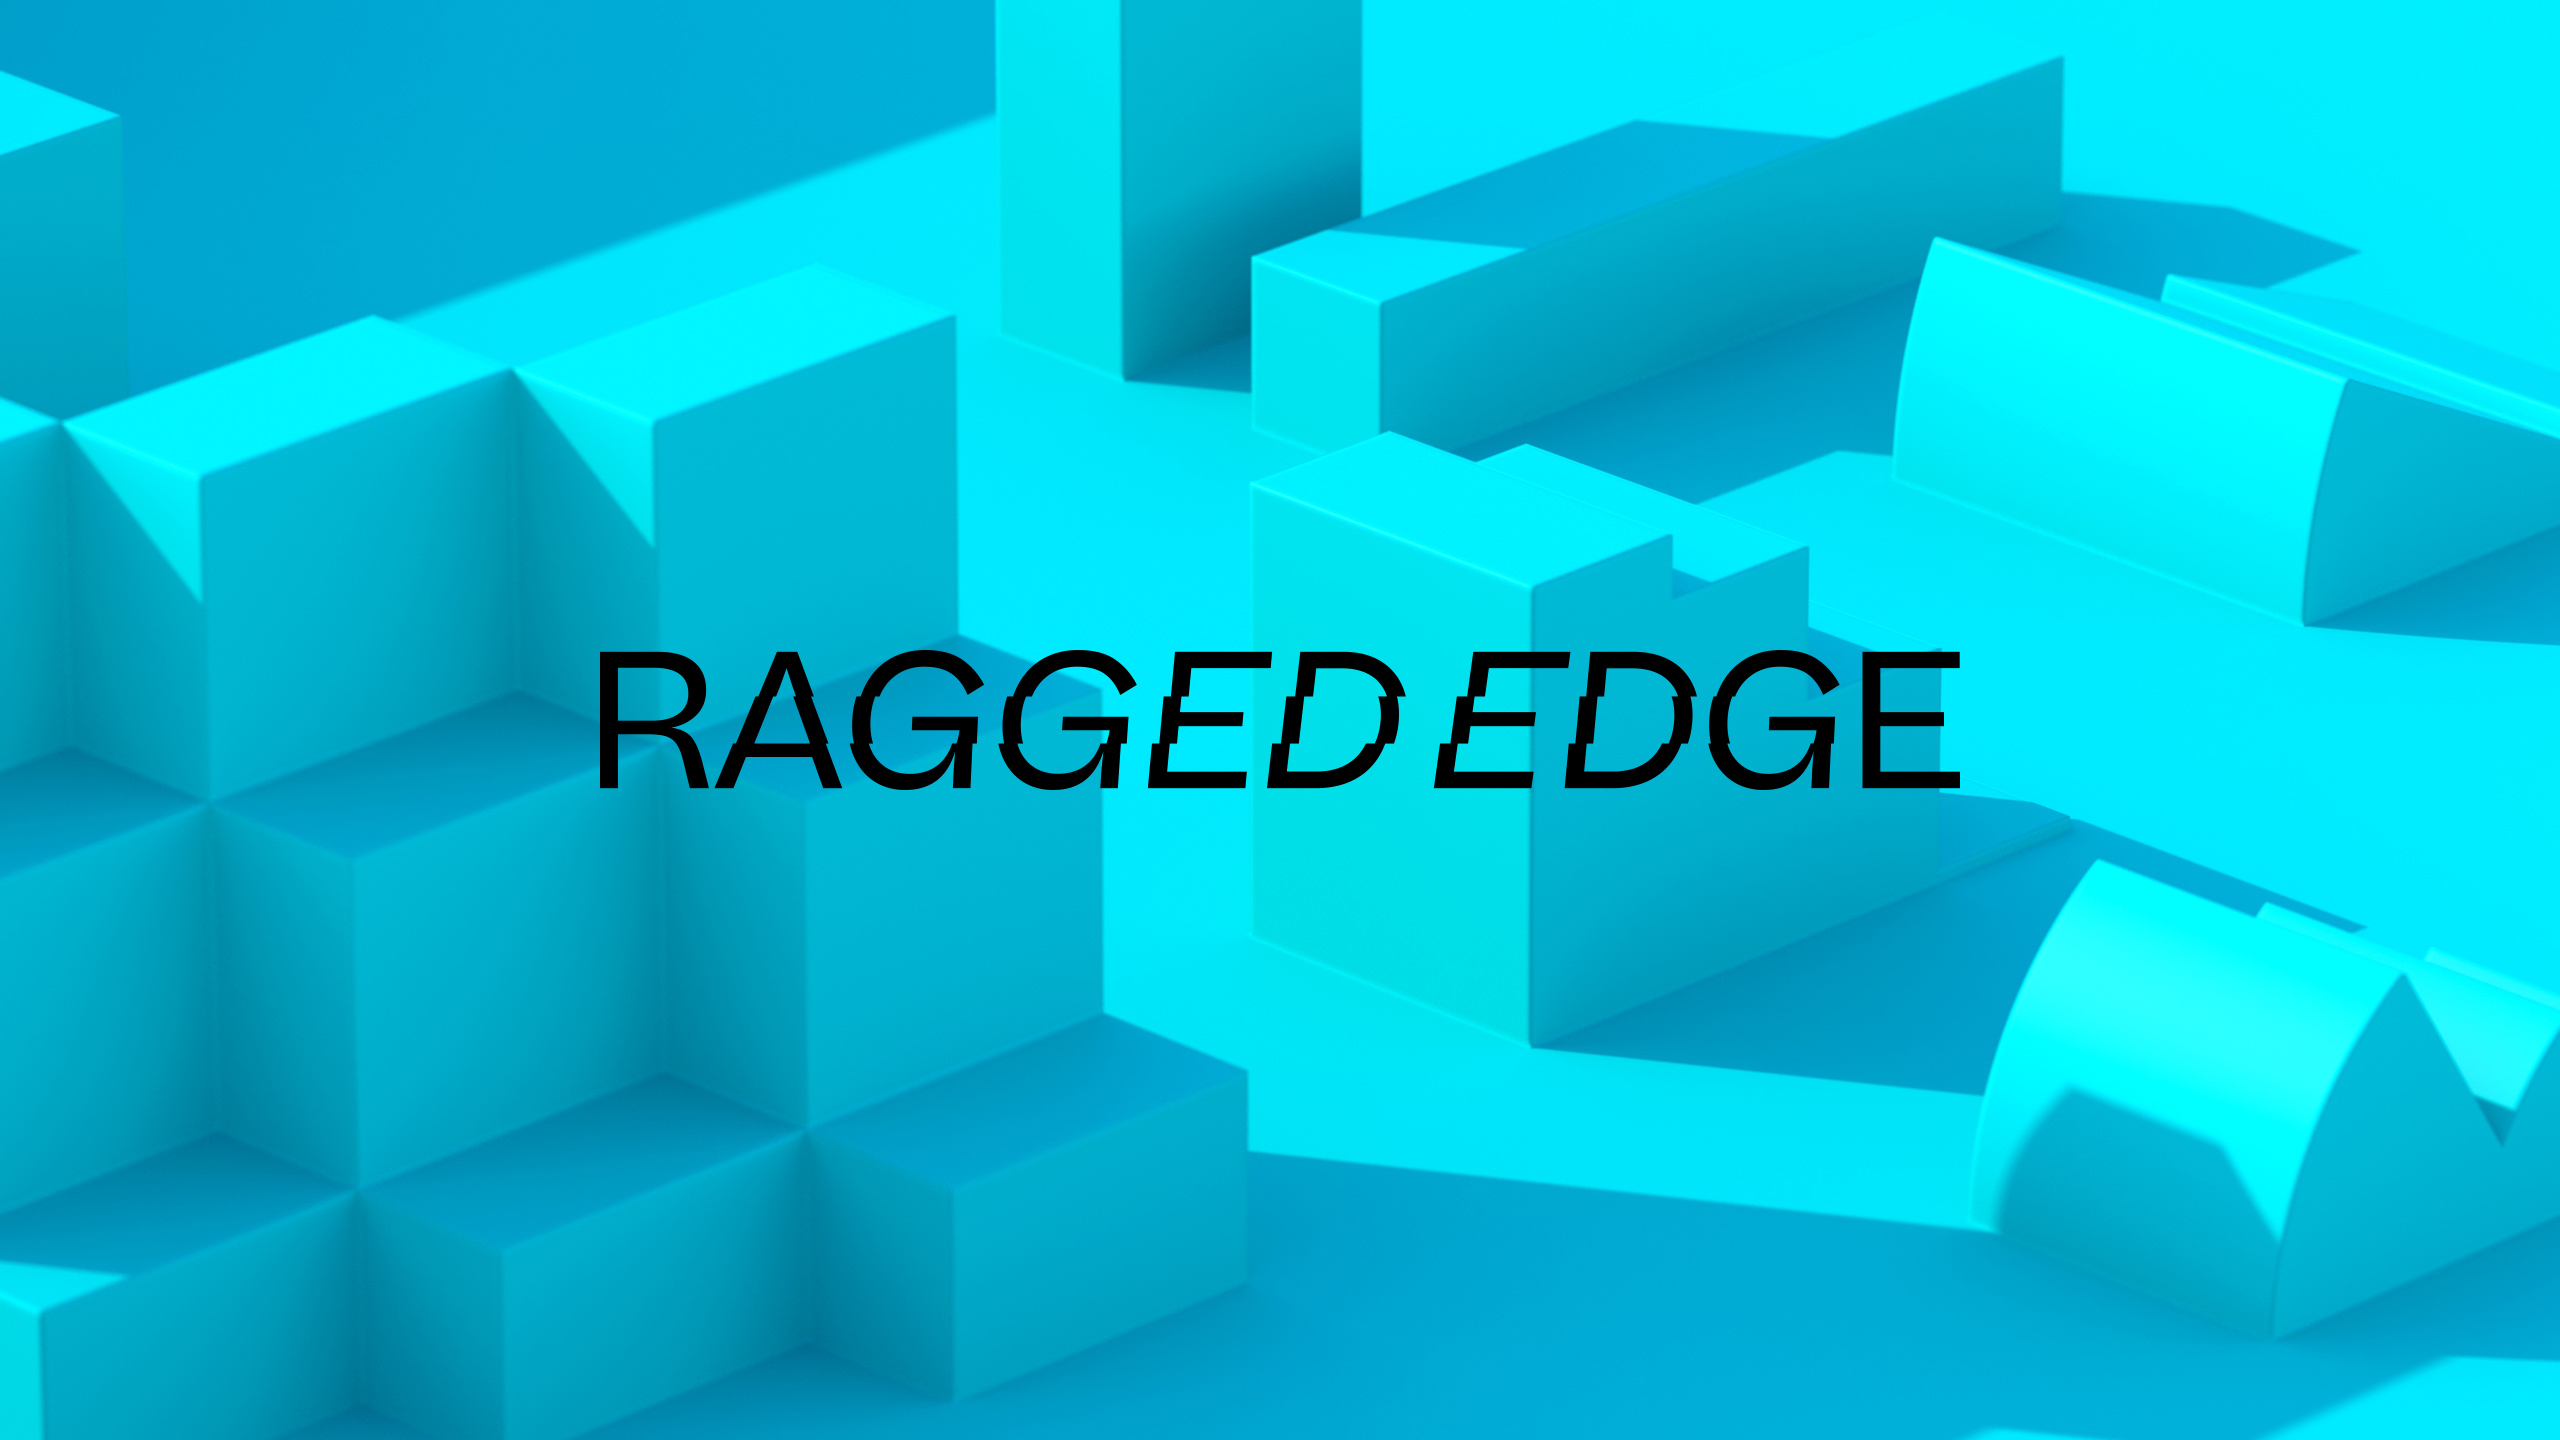 (c) Raggededge.com